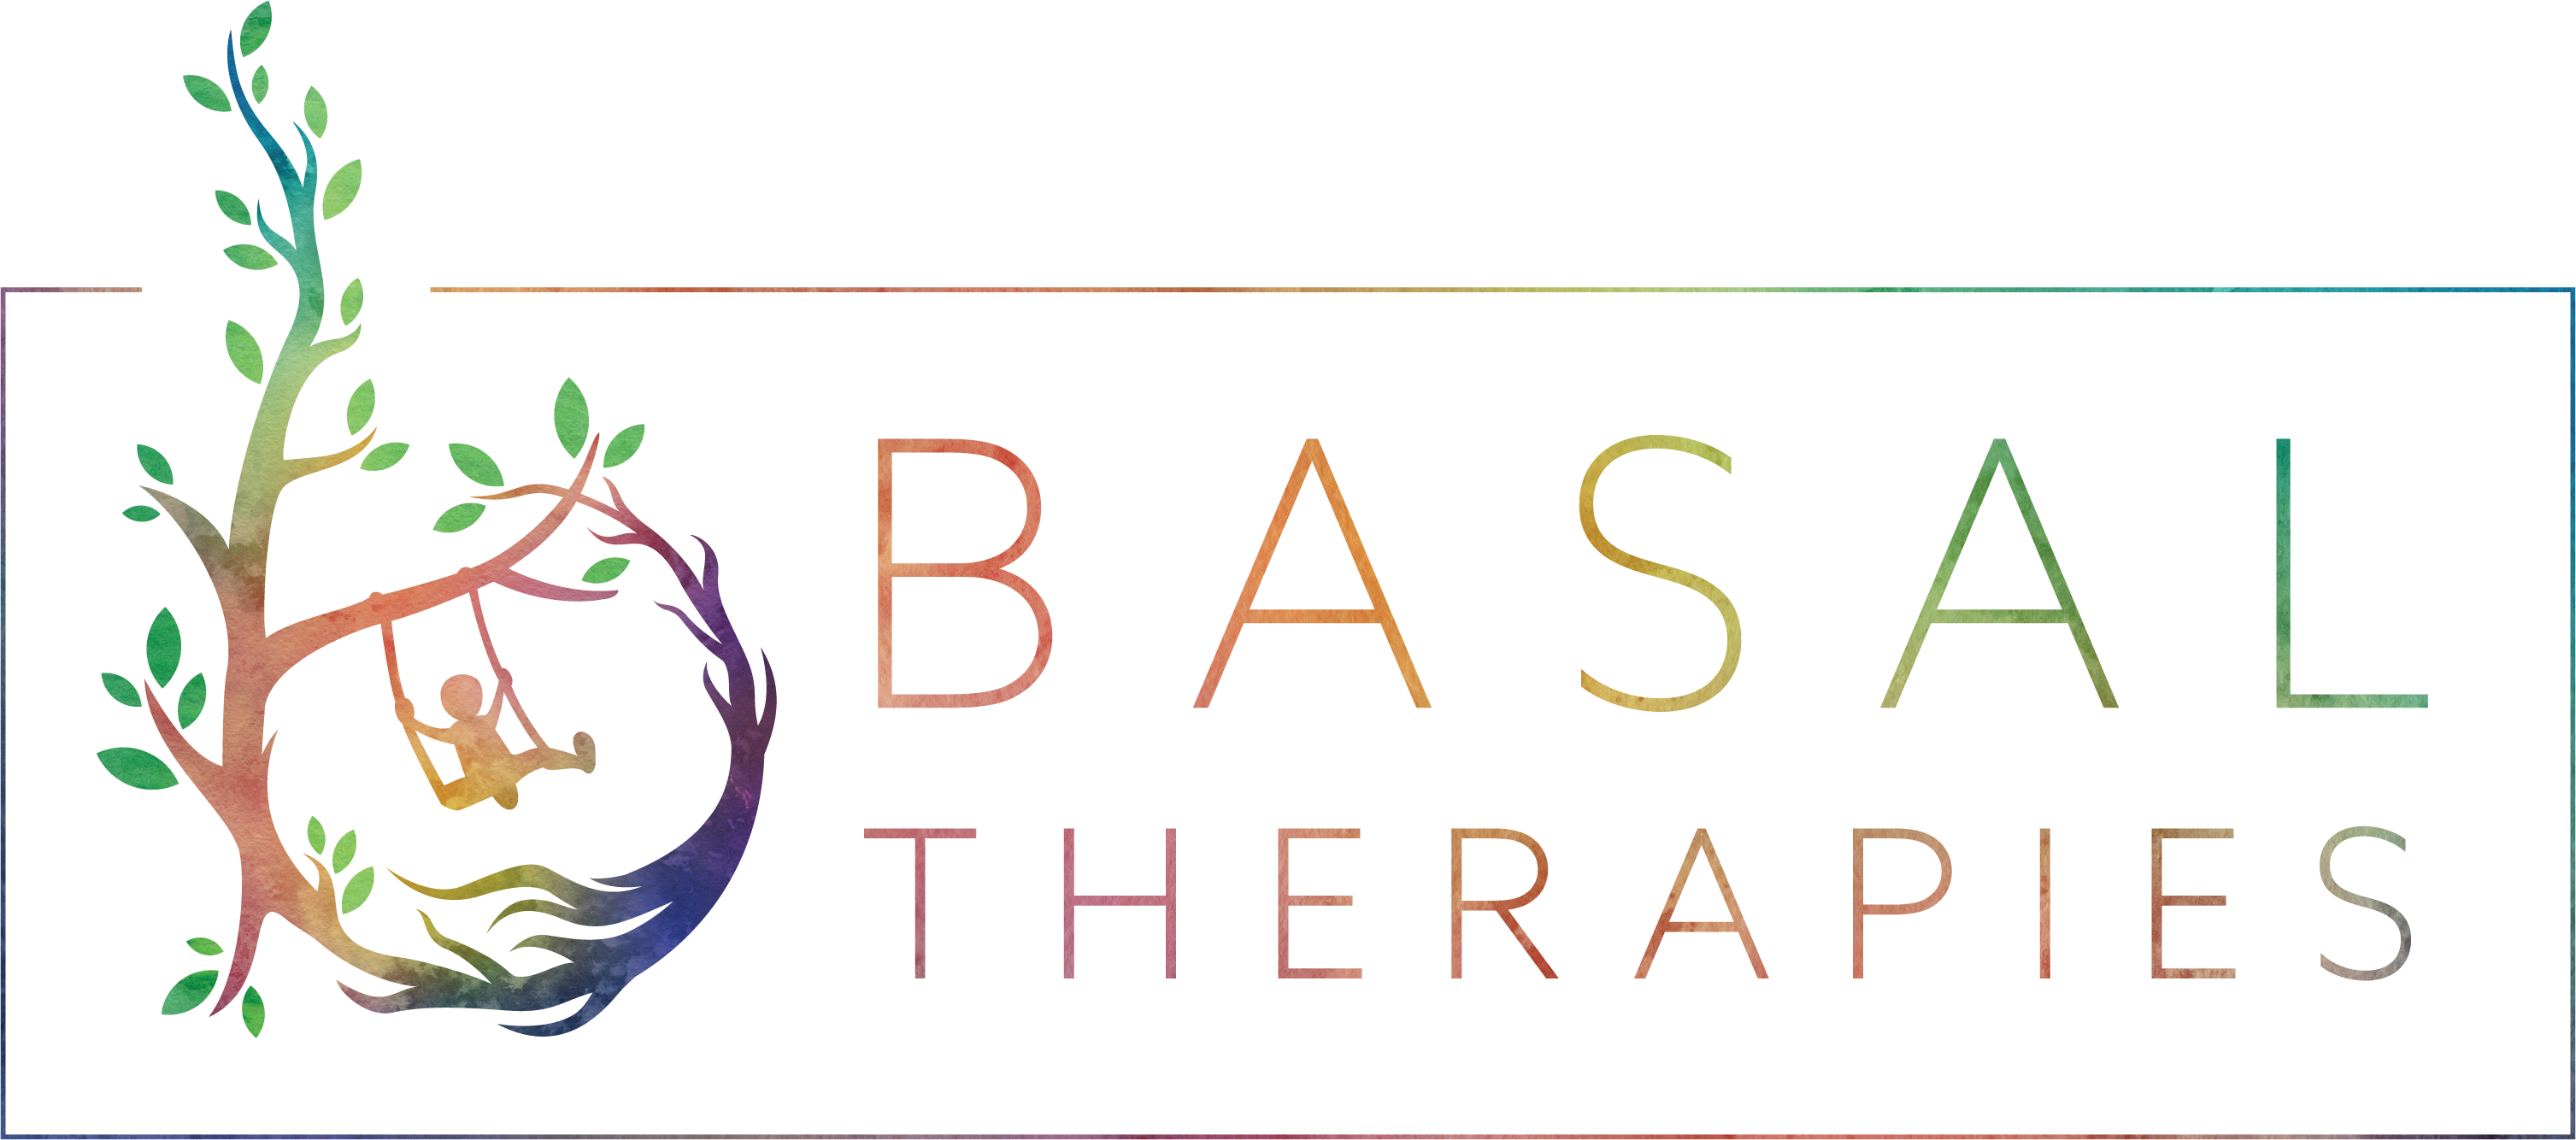 Basal Therapies